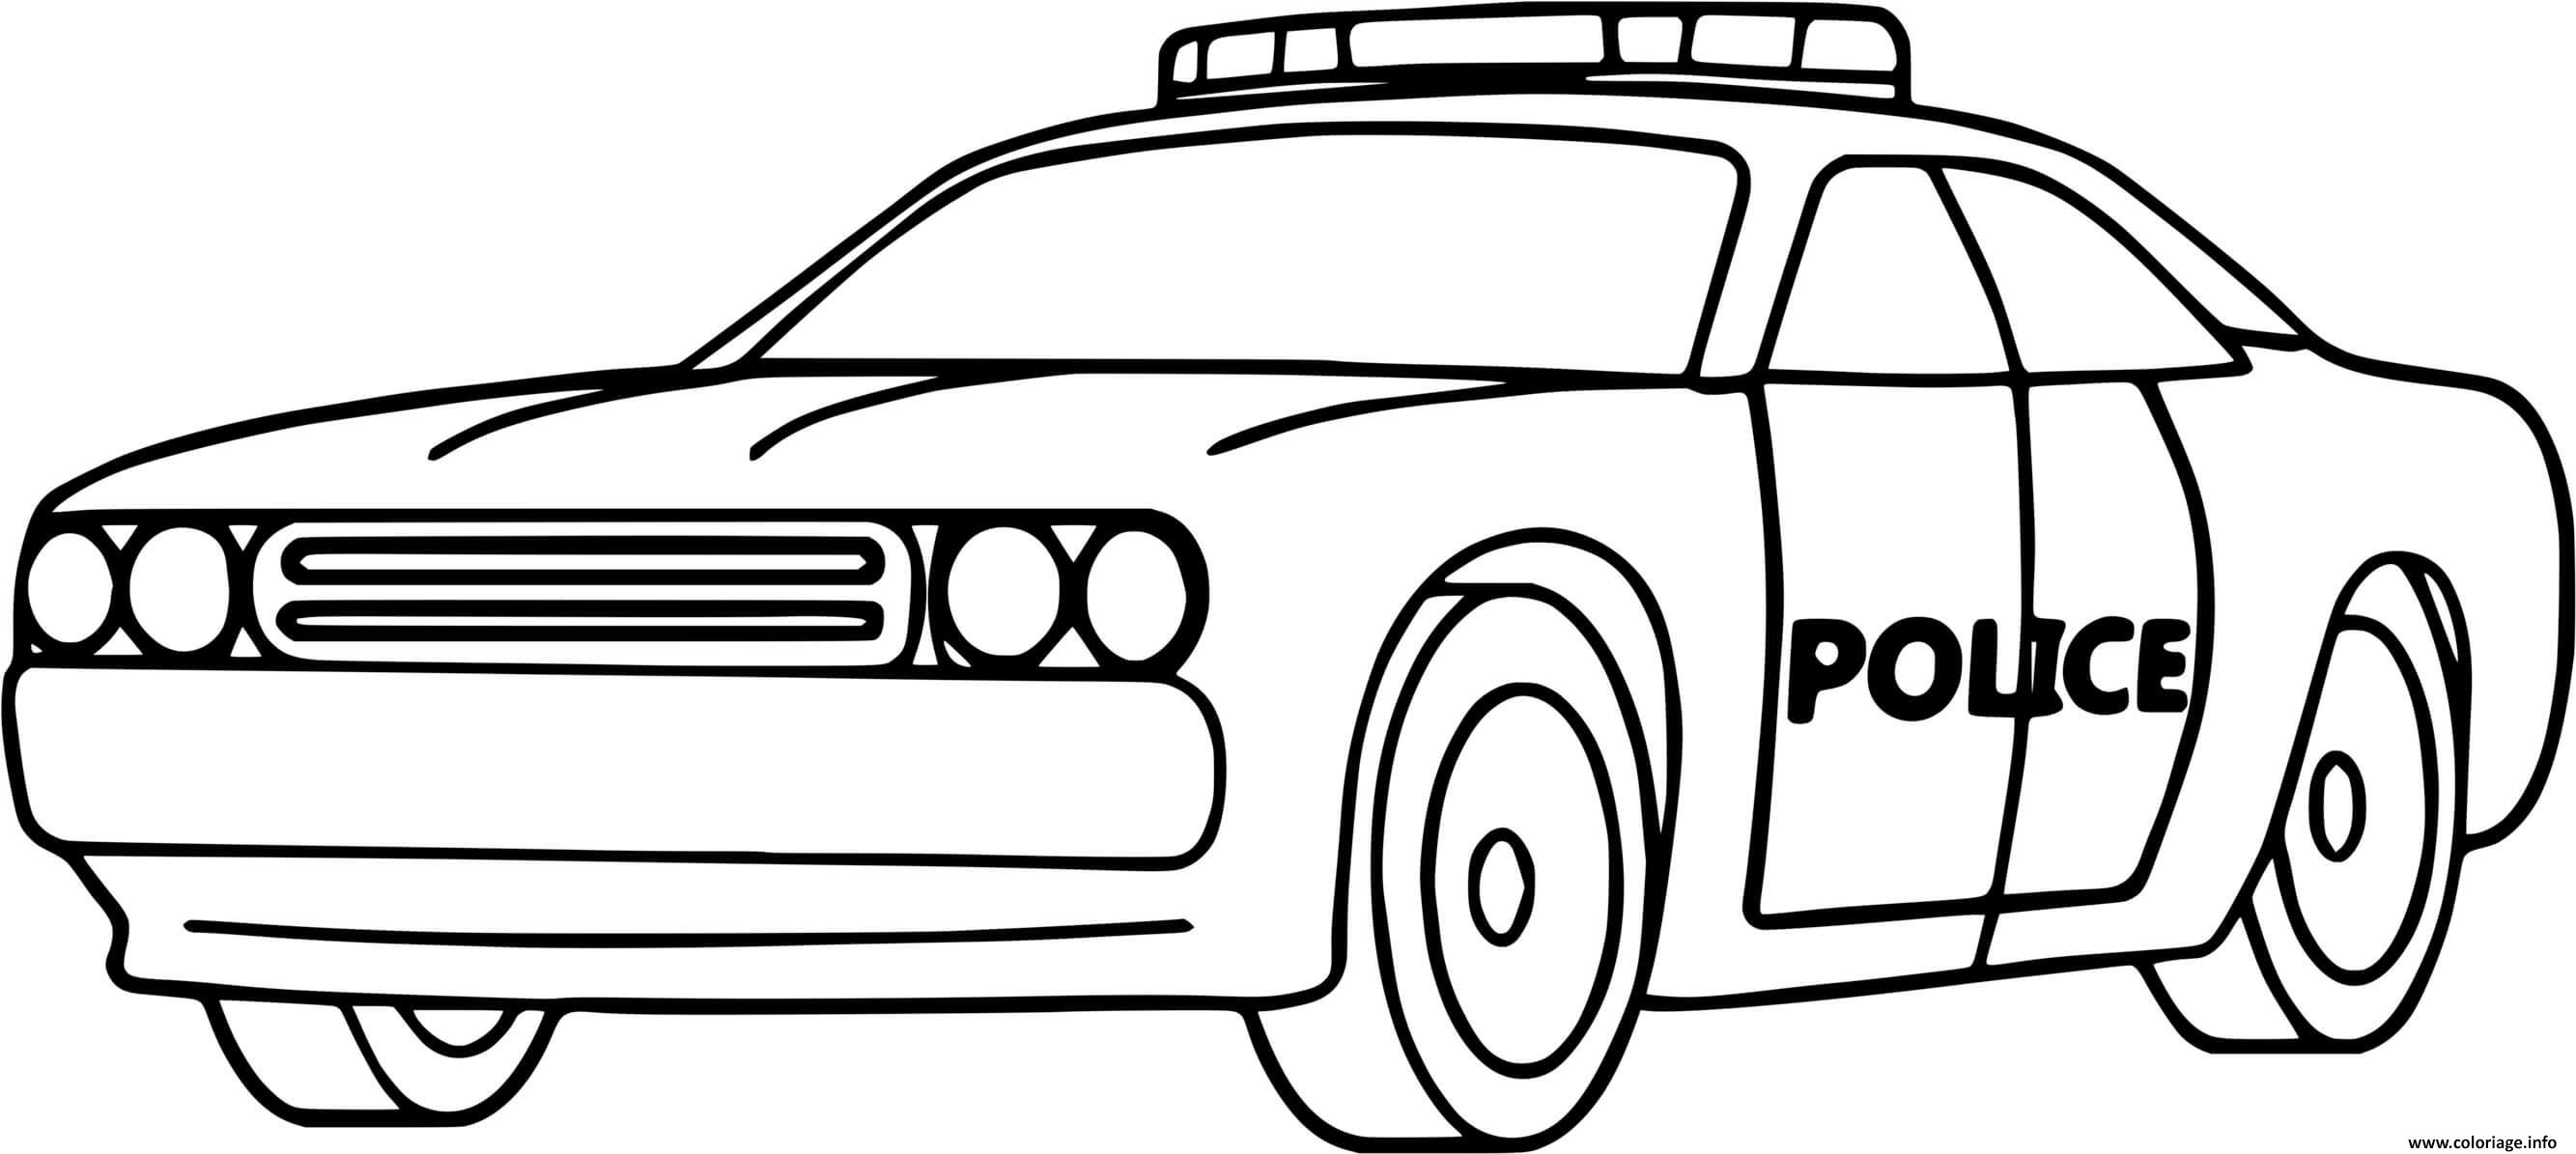 Coloriage voiture Gendarmerie police - JeColorie.com